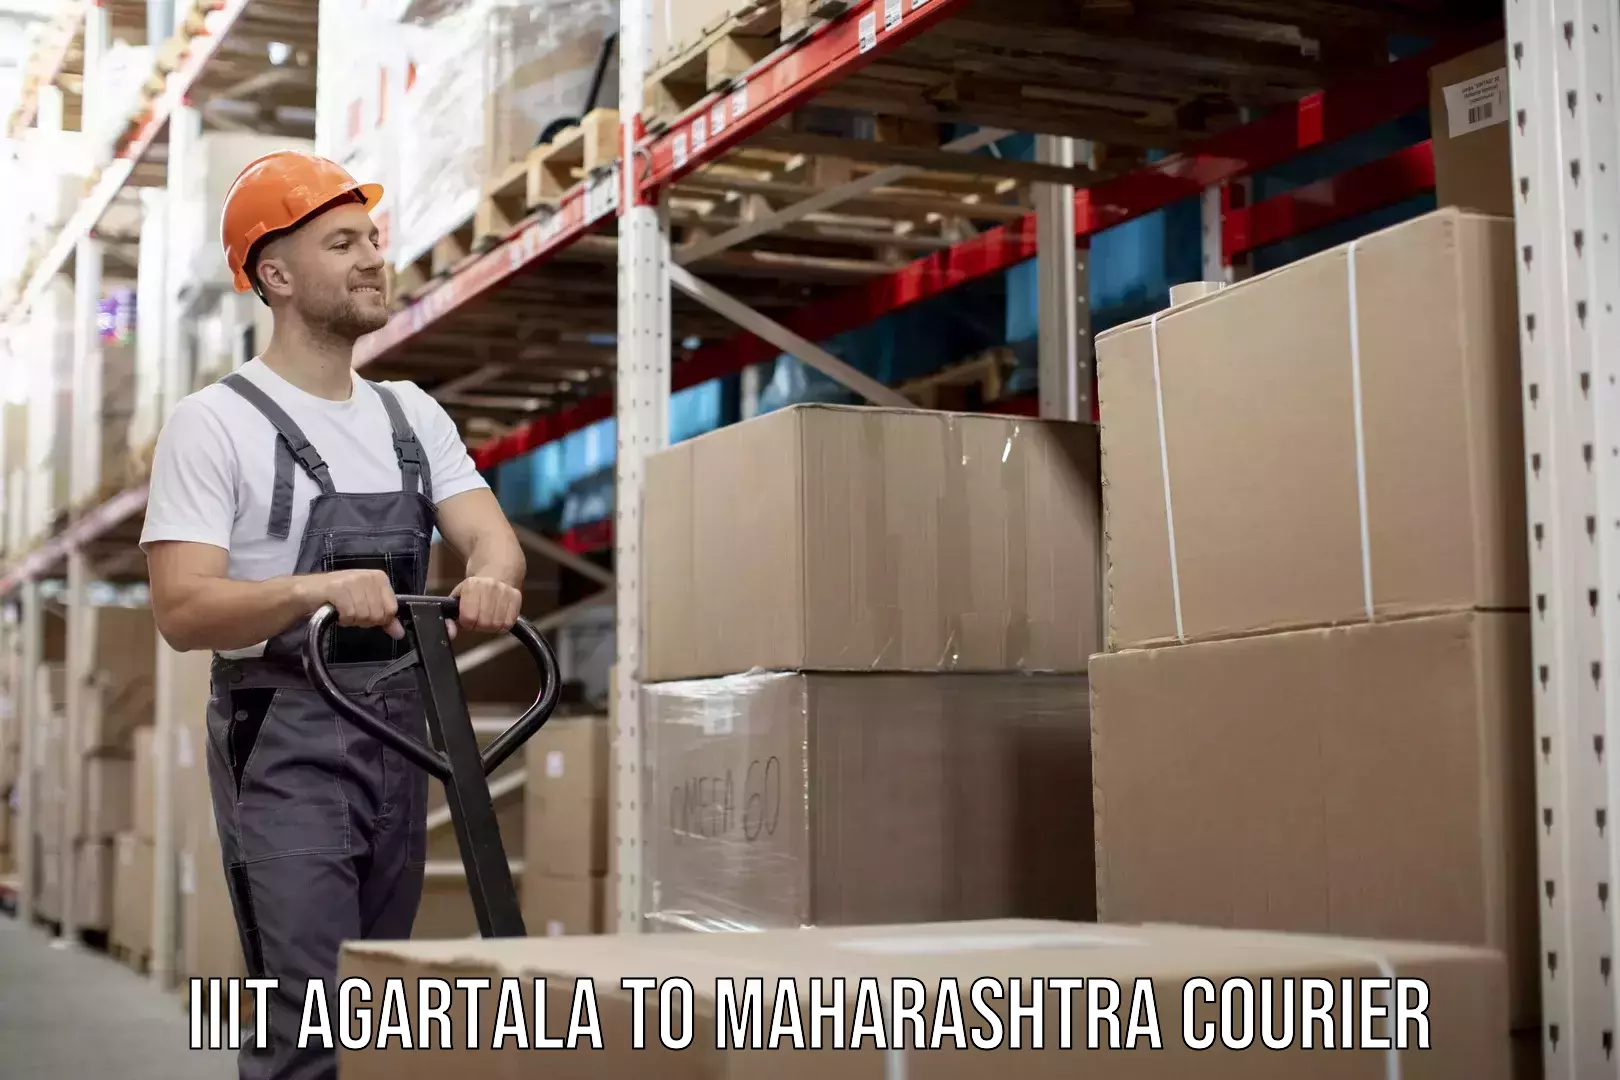 Special handling courier IIIT Agartala to Maharashtra